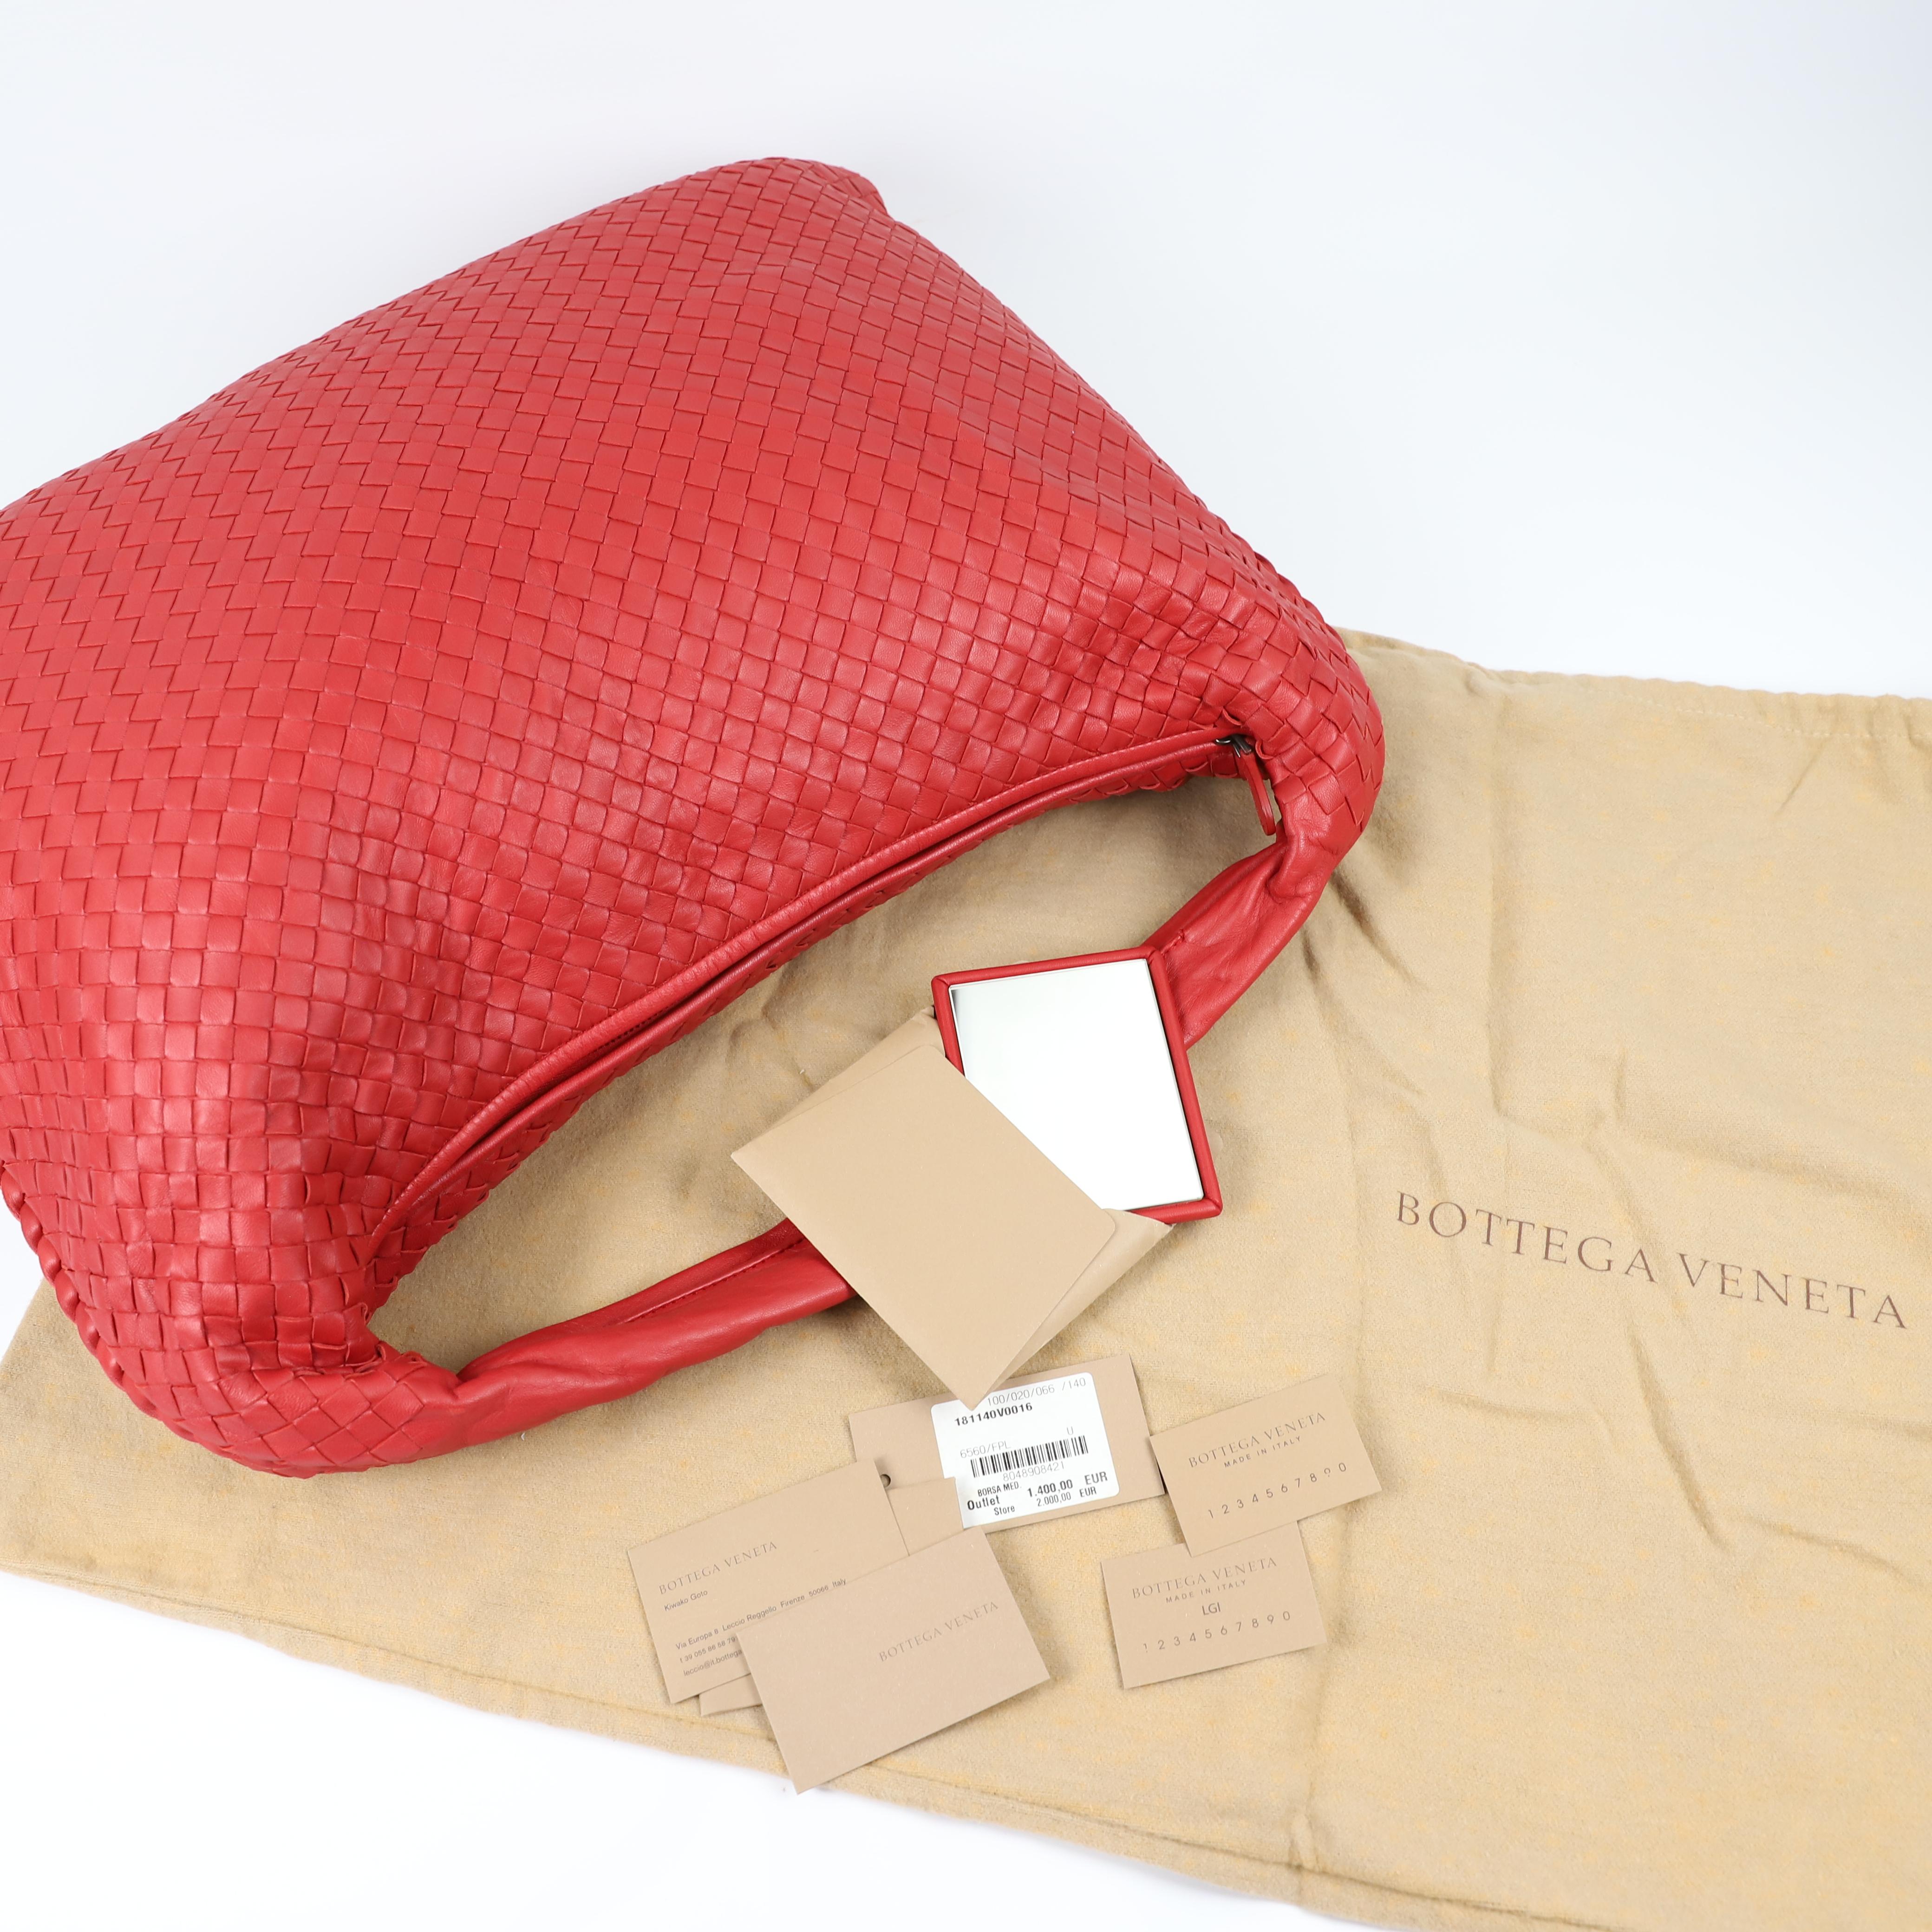 Bottega Veneta Veneta leather tote For Sale 4